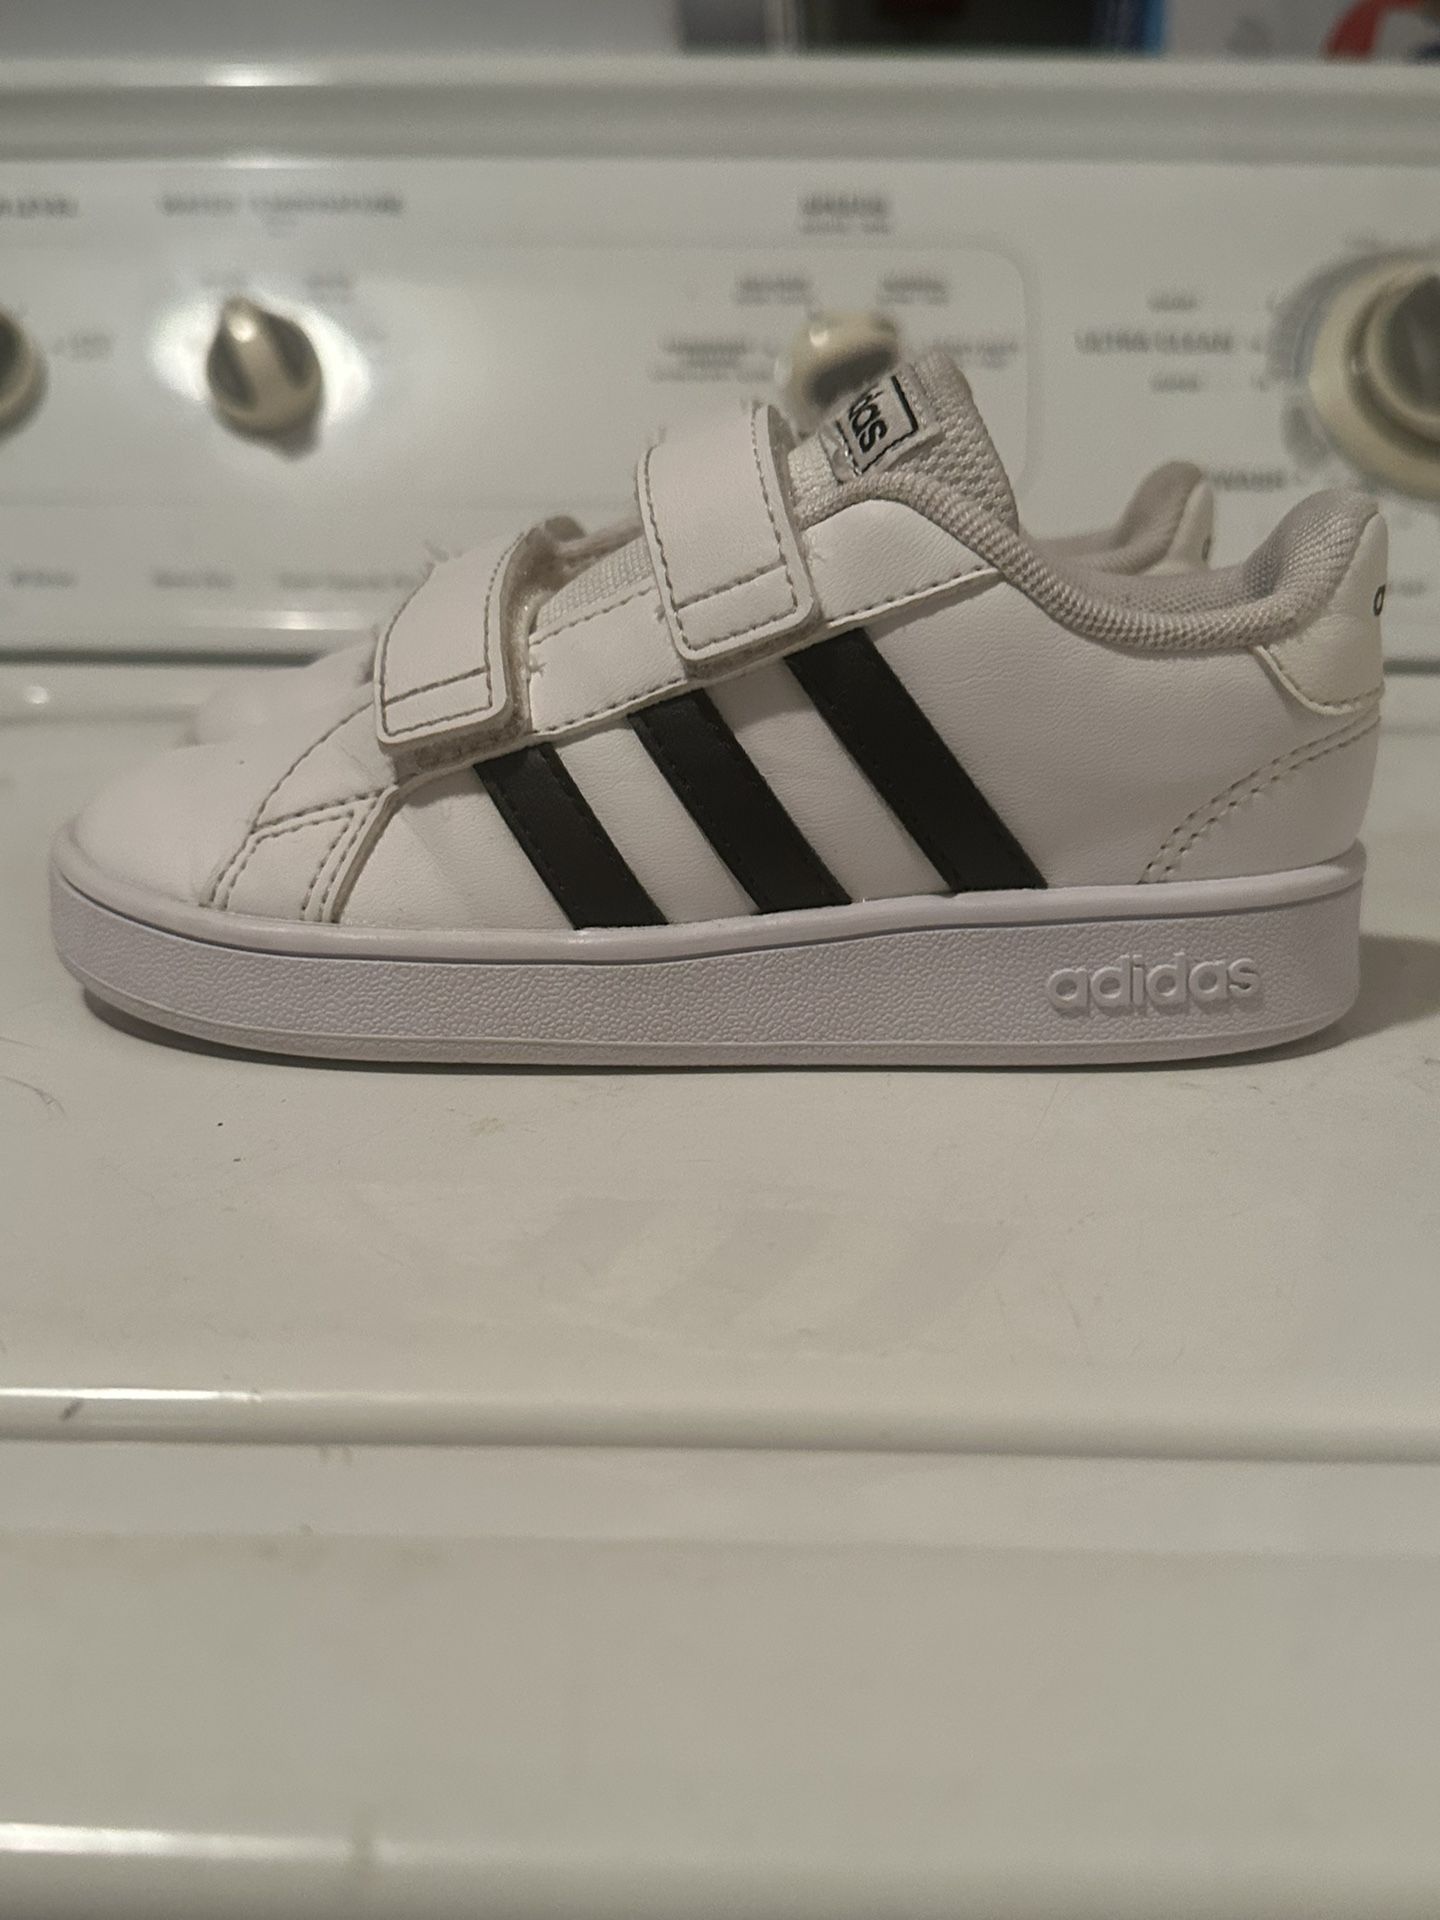 Adidas Shoes Size 11